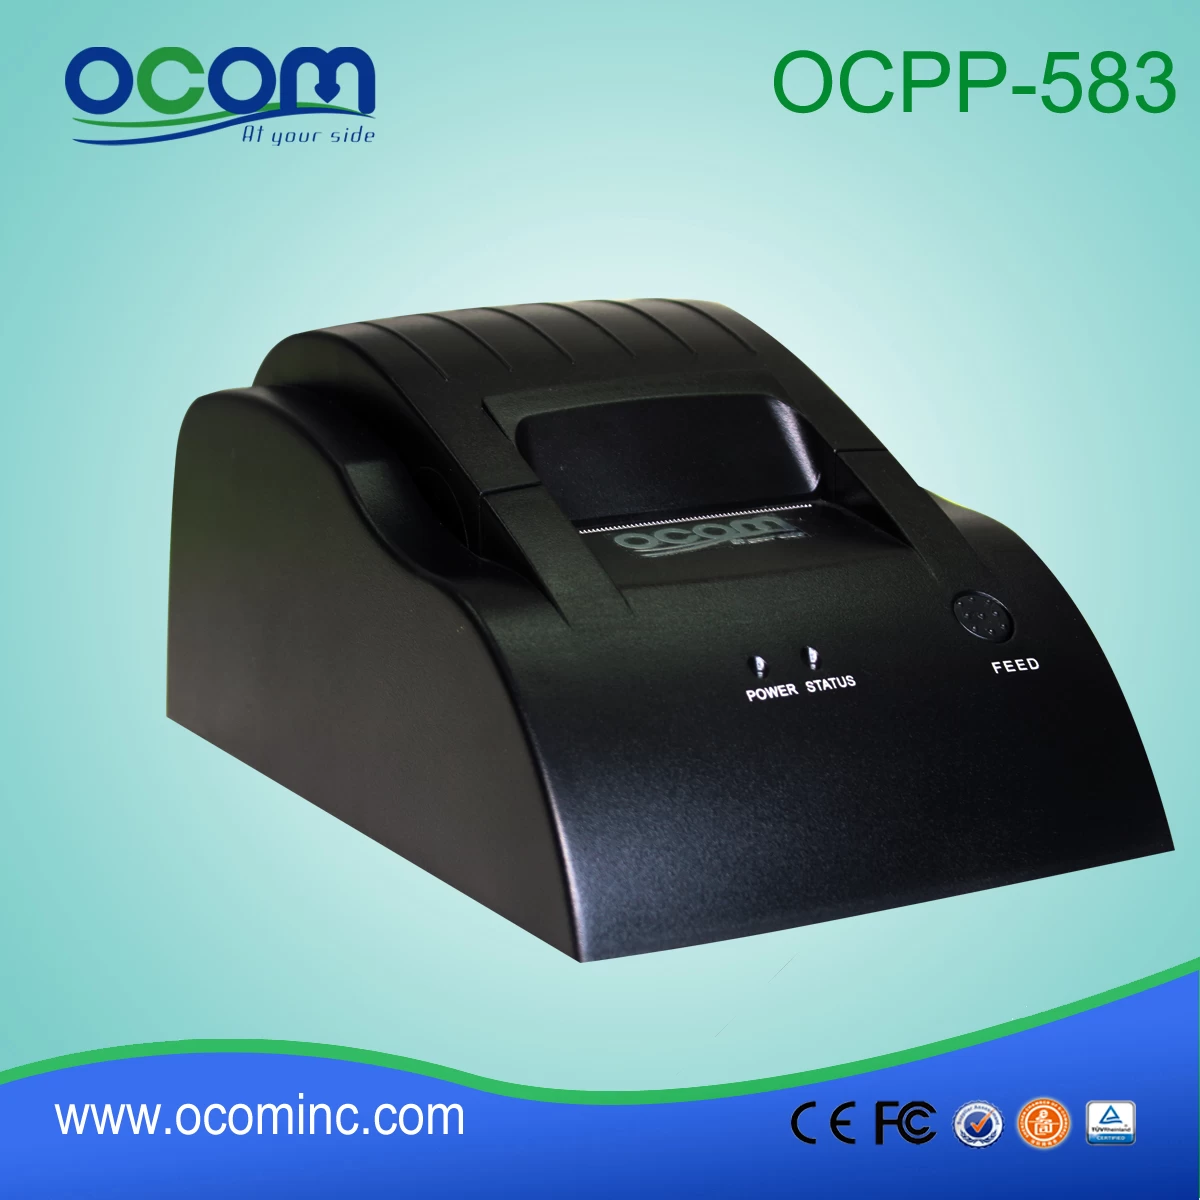 (OCPP-583) 58mm High quality Thermal Printer